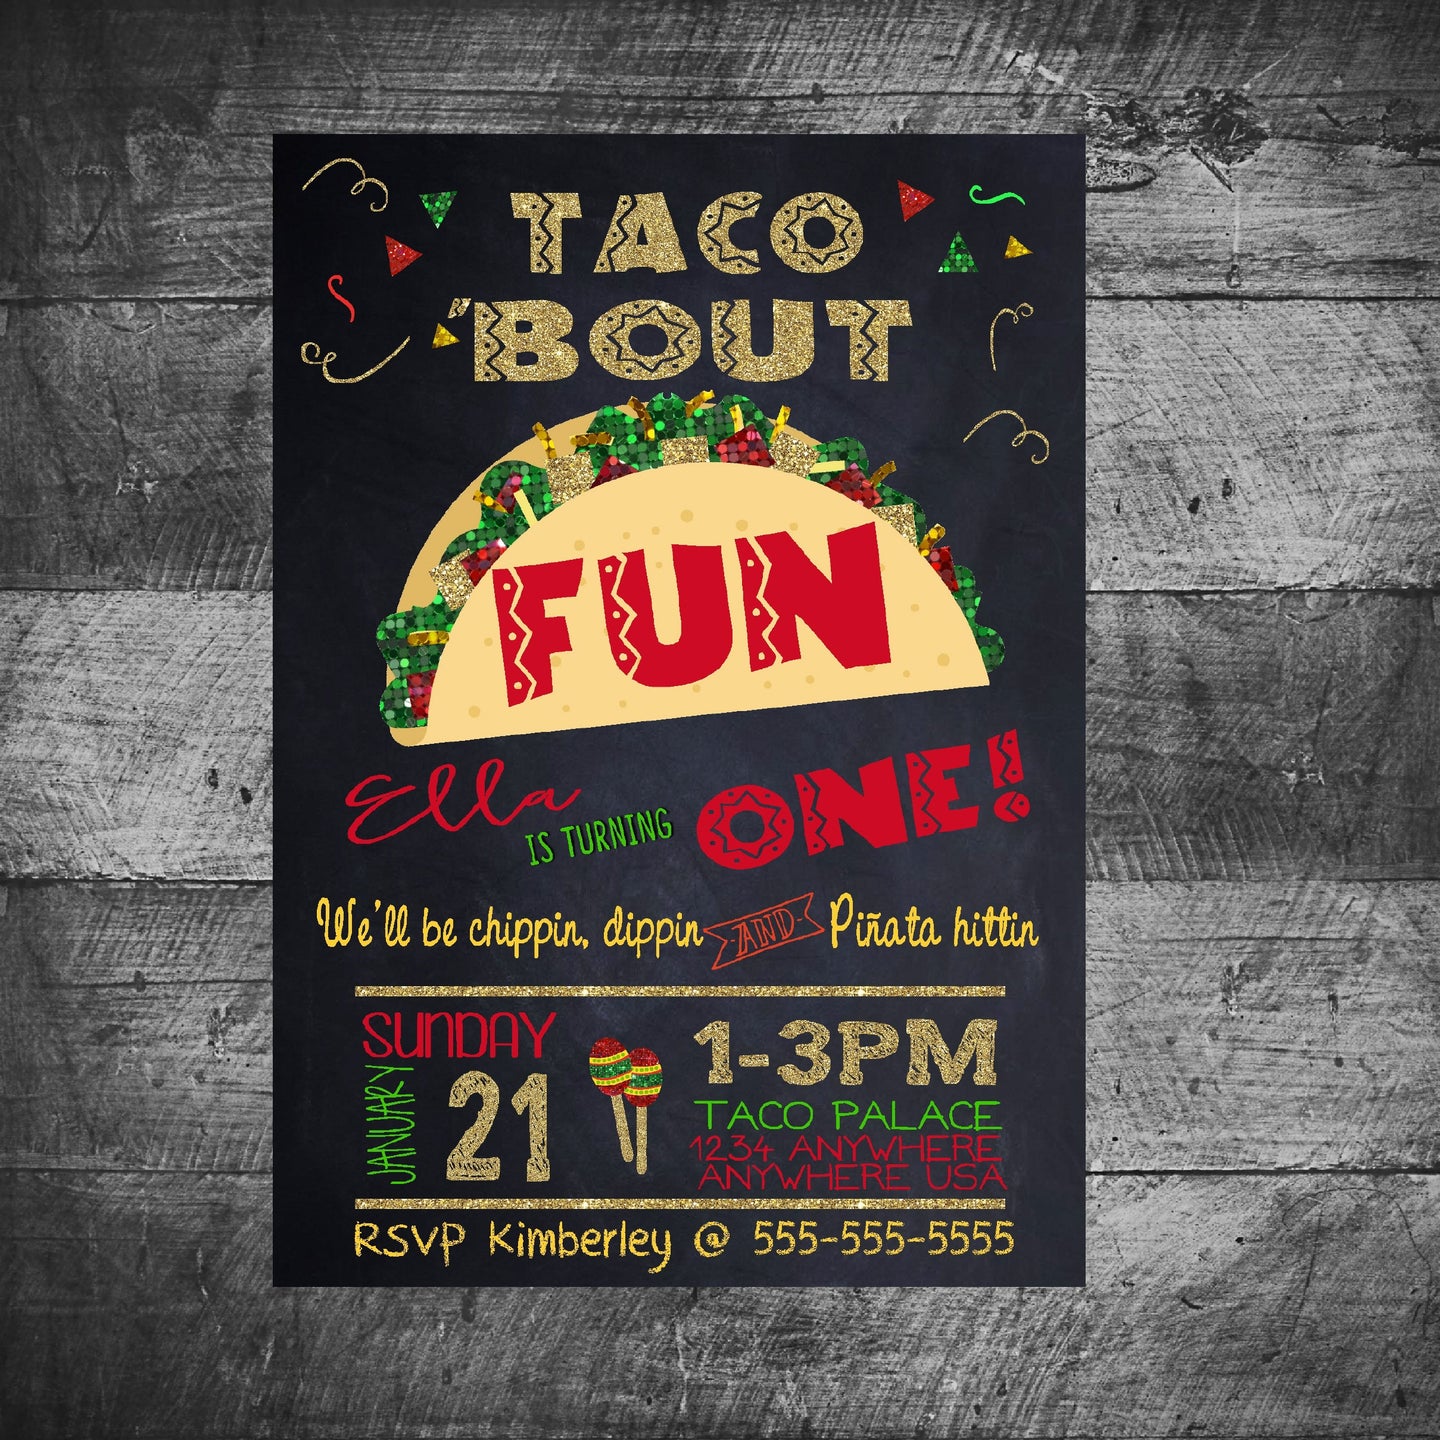 TACO BIRTHDAY PARTY - One Birthday Party Invitation - Fiesta Party - First Birthday Invite - Fiesta - Taco Birthday Party, Mexican Fiesta